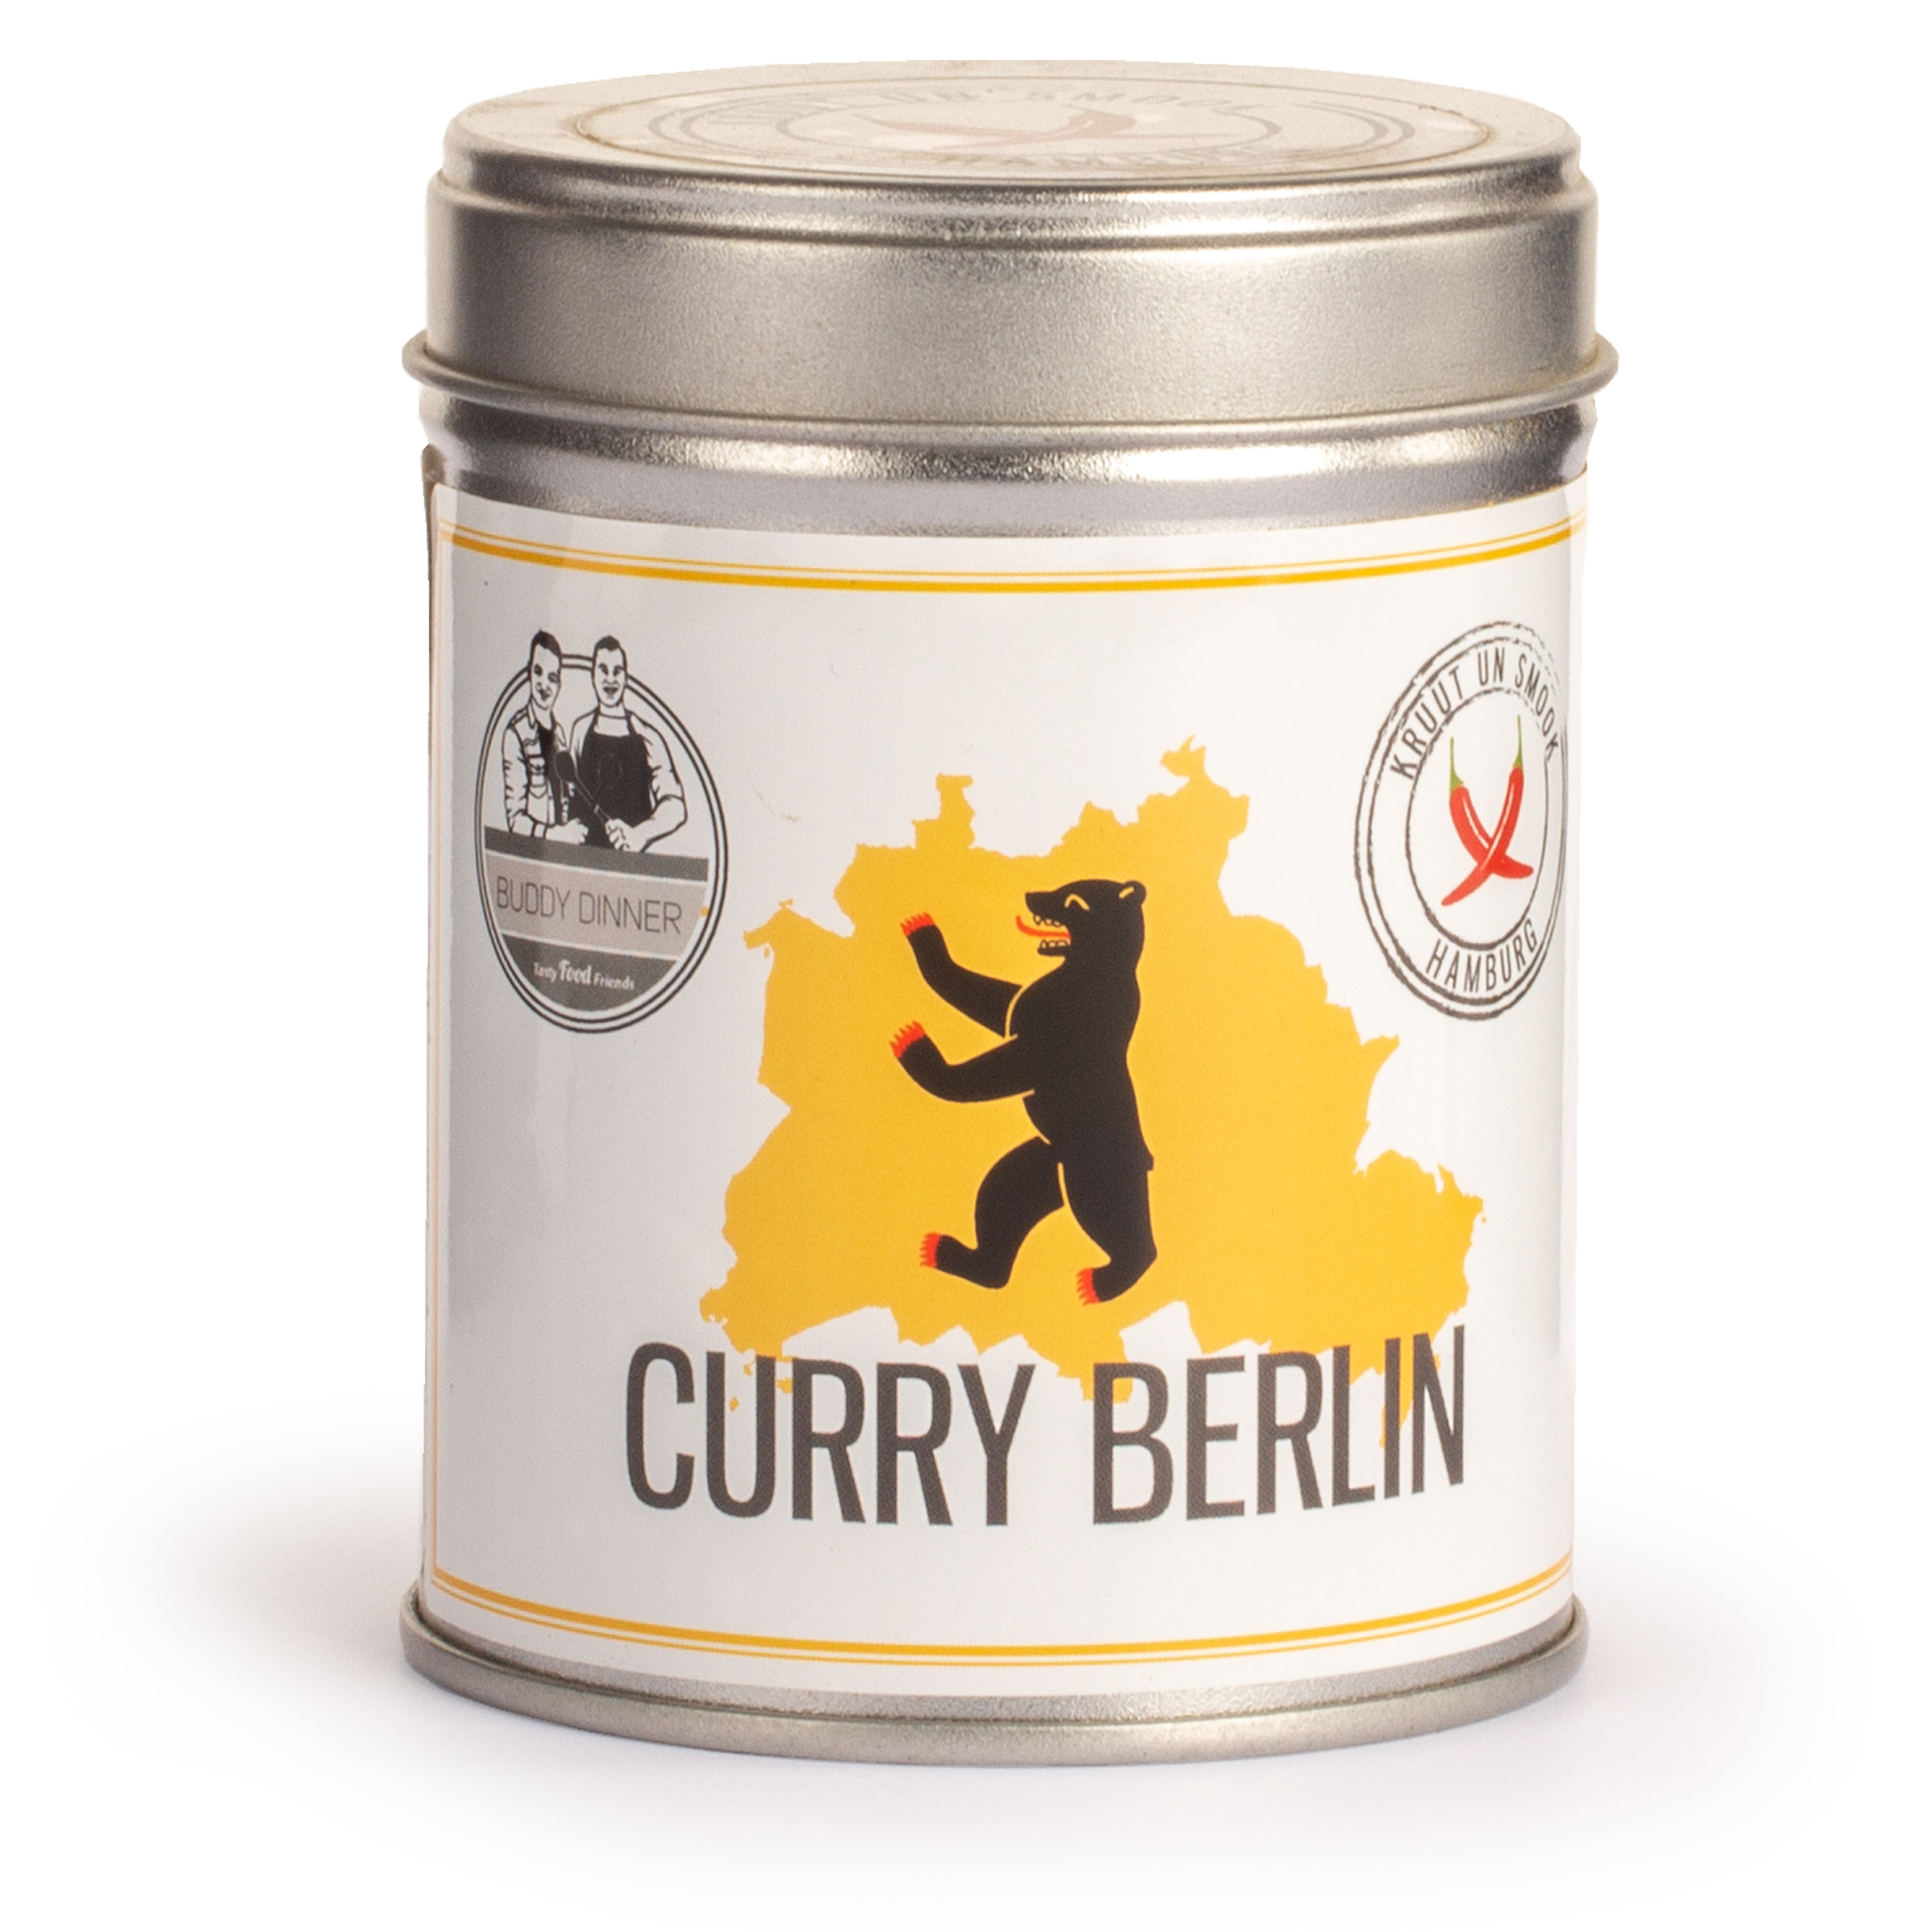 Buddy Dinner Curry Berlin